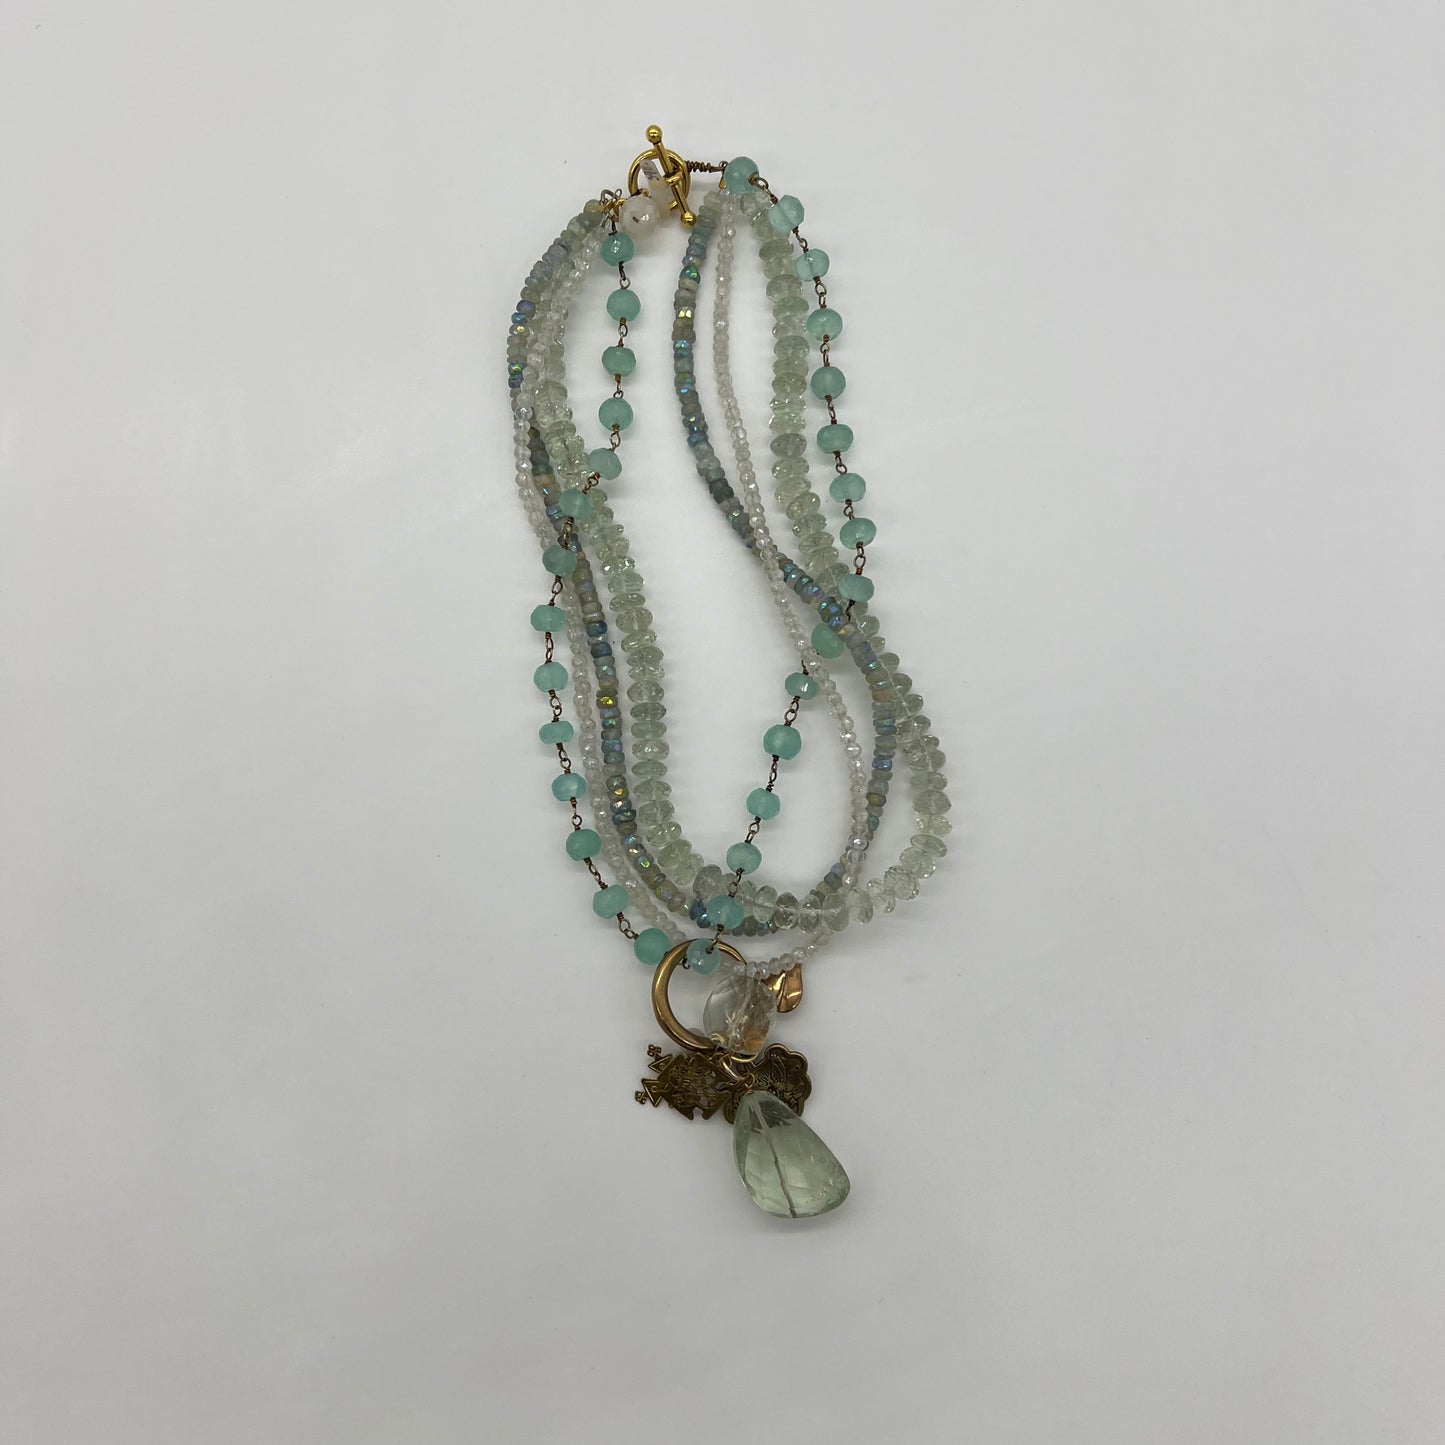 Moonstone Necklace with Green Quartz Pendant